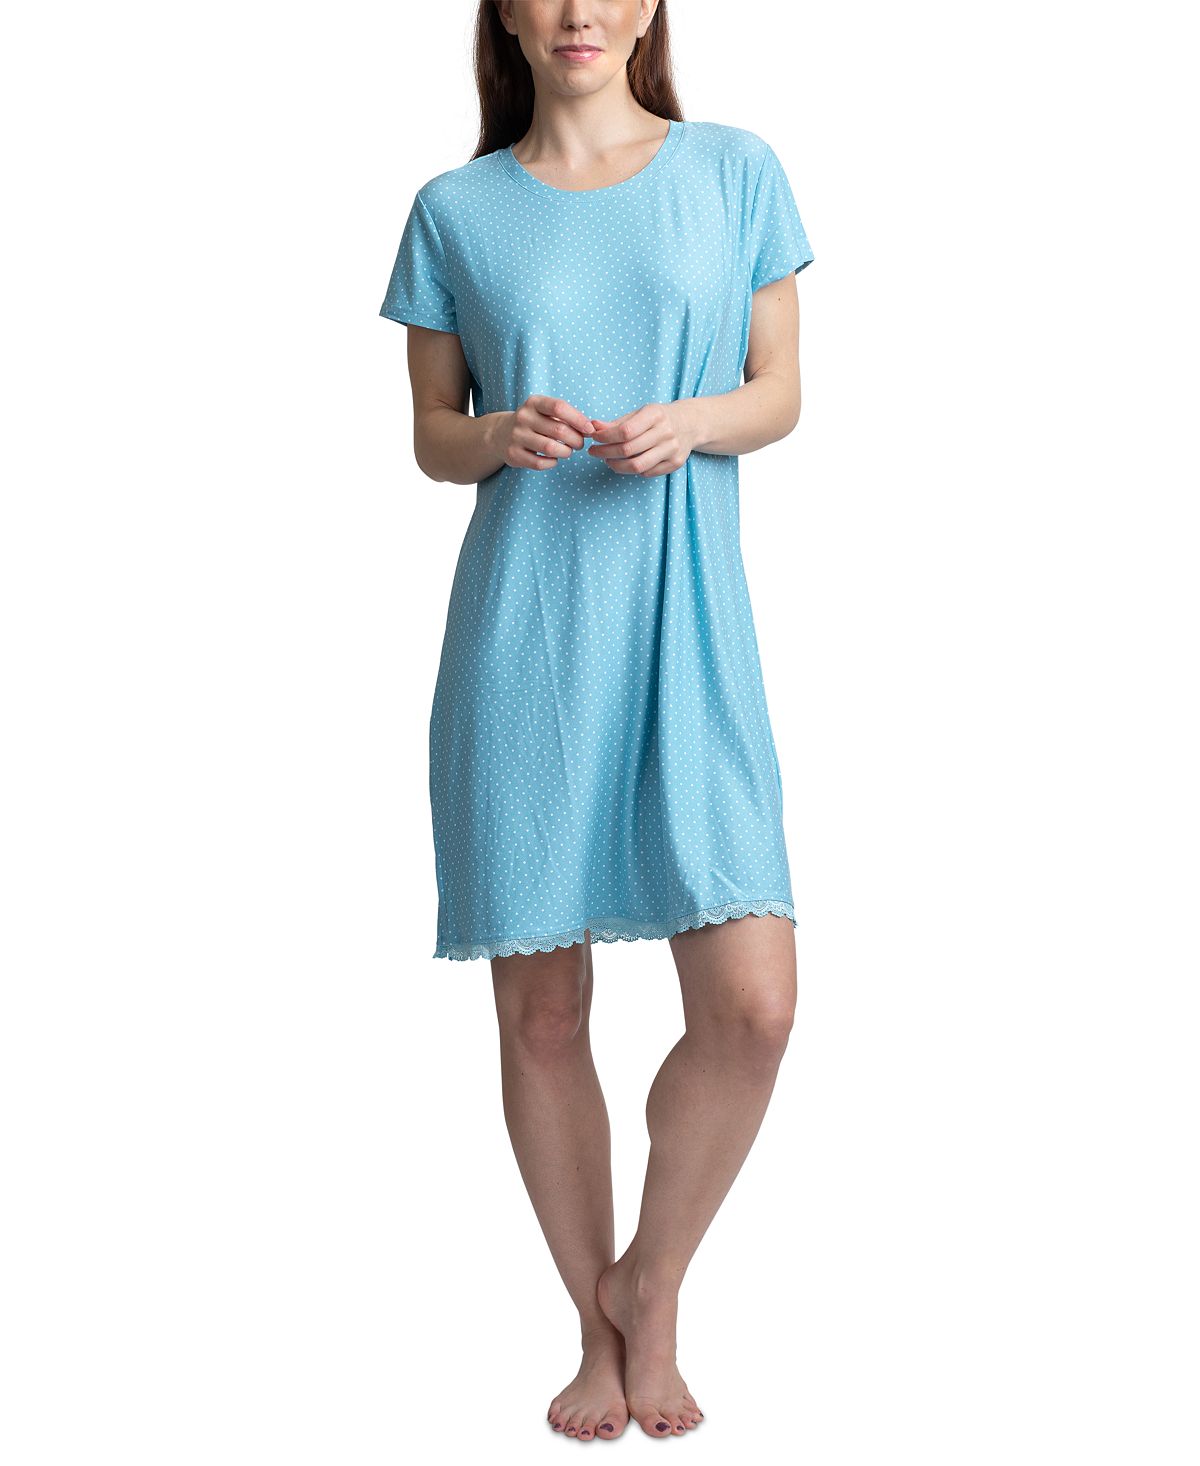 Muk Luks Printed Short Sleeve Sleepshirt Nightgown White Dot